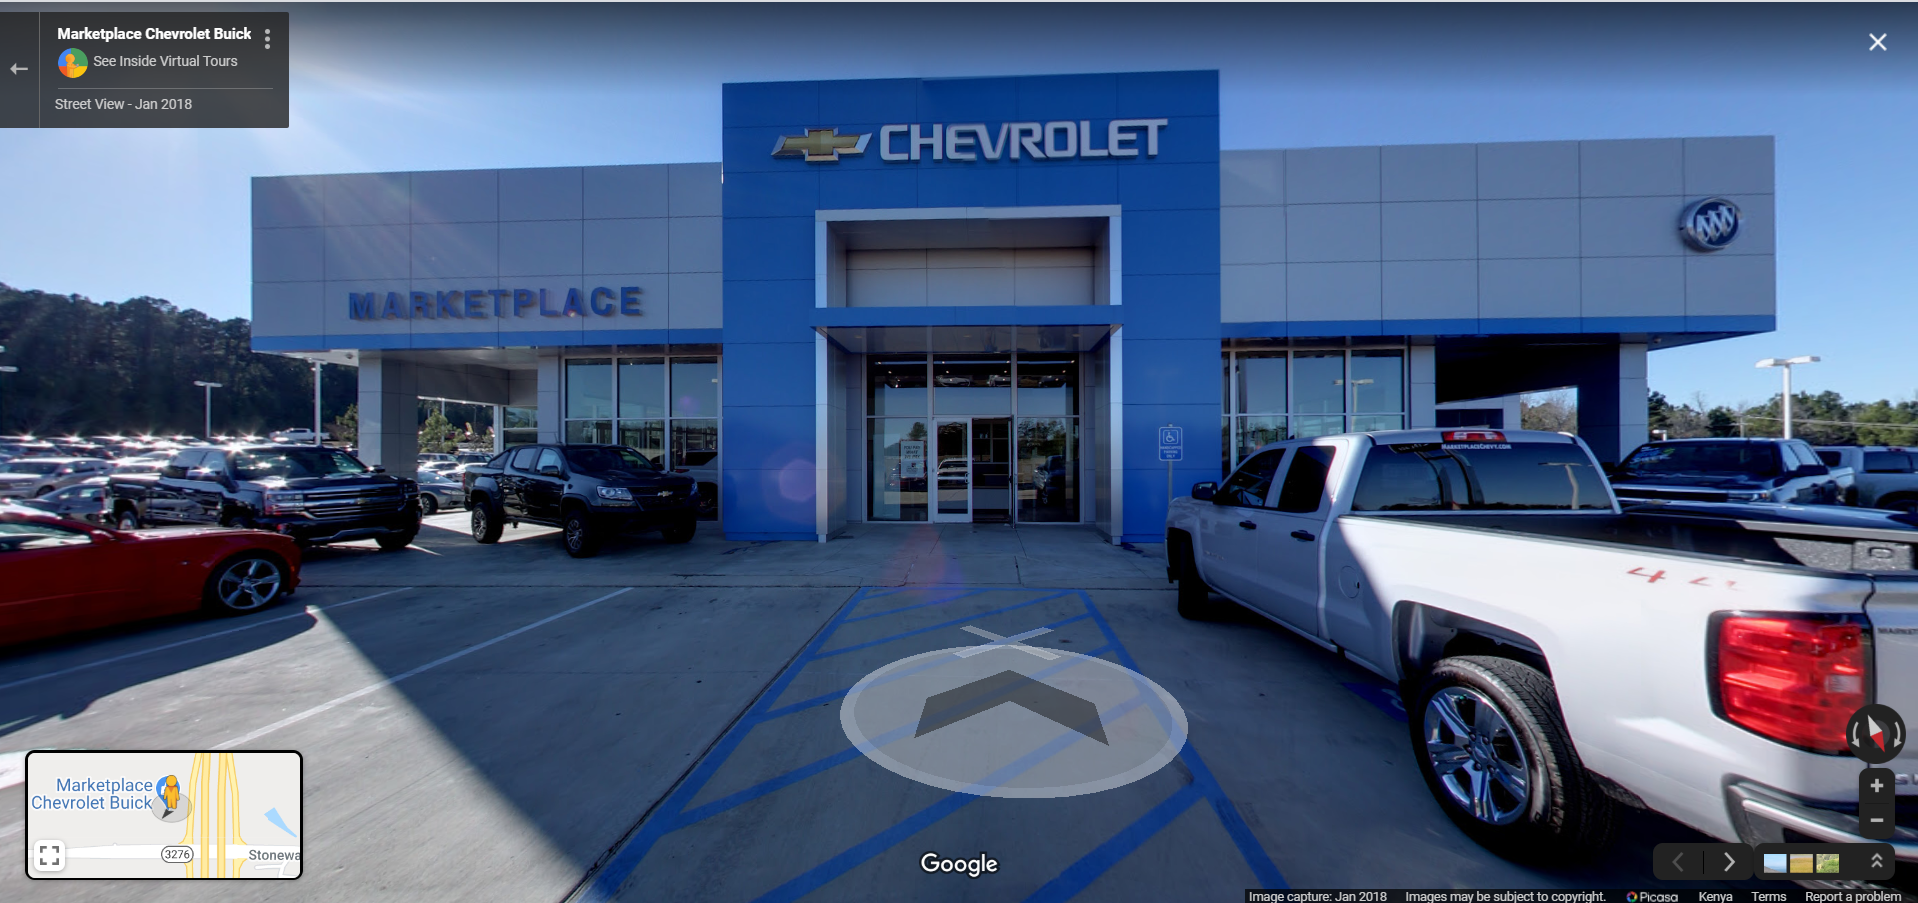 Marketplace Chevrolet Buick